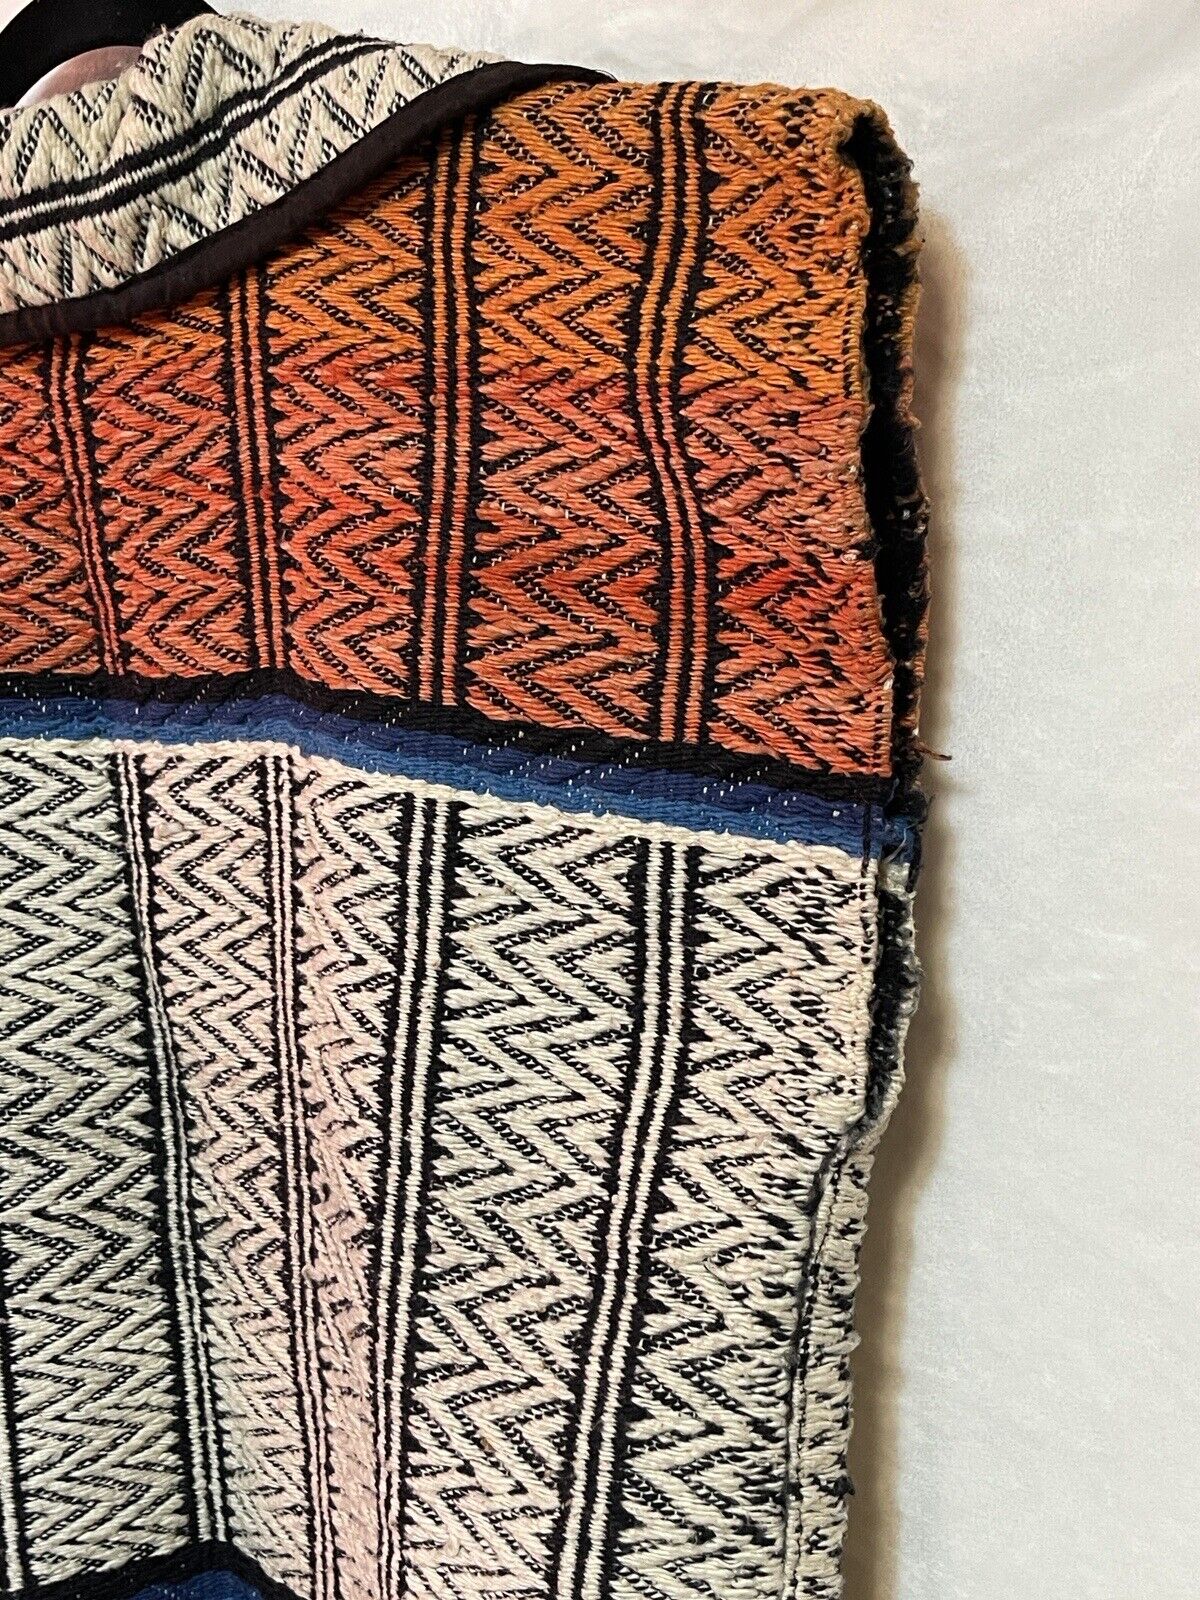 Vintage 60s Mexican Blanket Vest XL Serape Ruana Retro Poncho Fringe Pockets